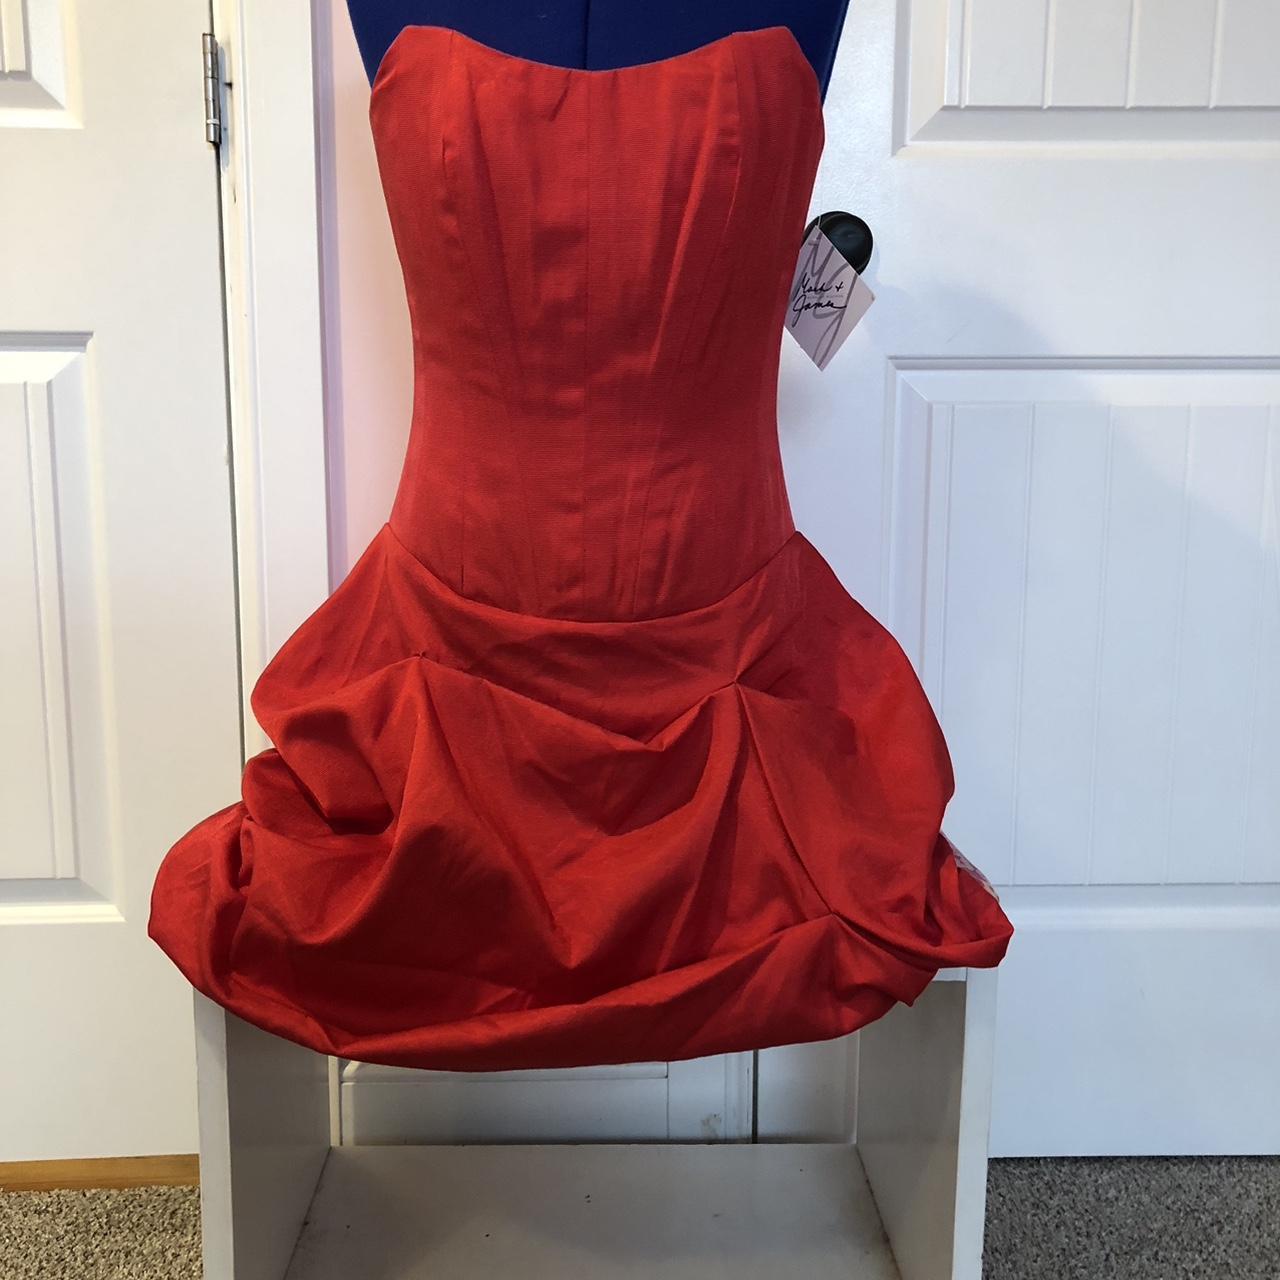 Early 2000s red strapless corset dress! BADGLEY MISCHKA - Depop